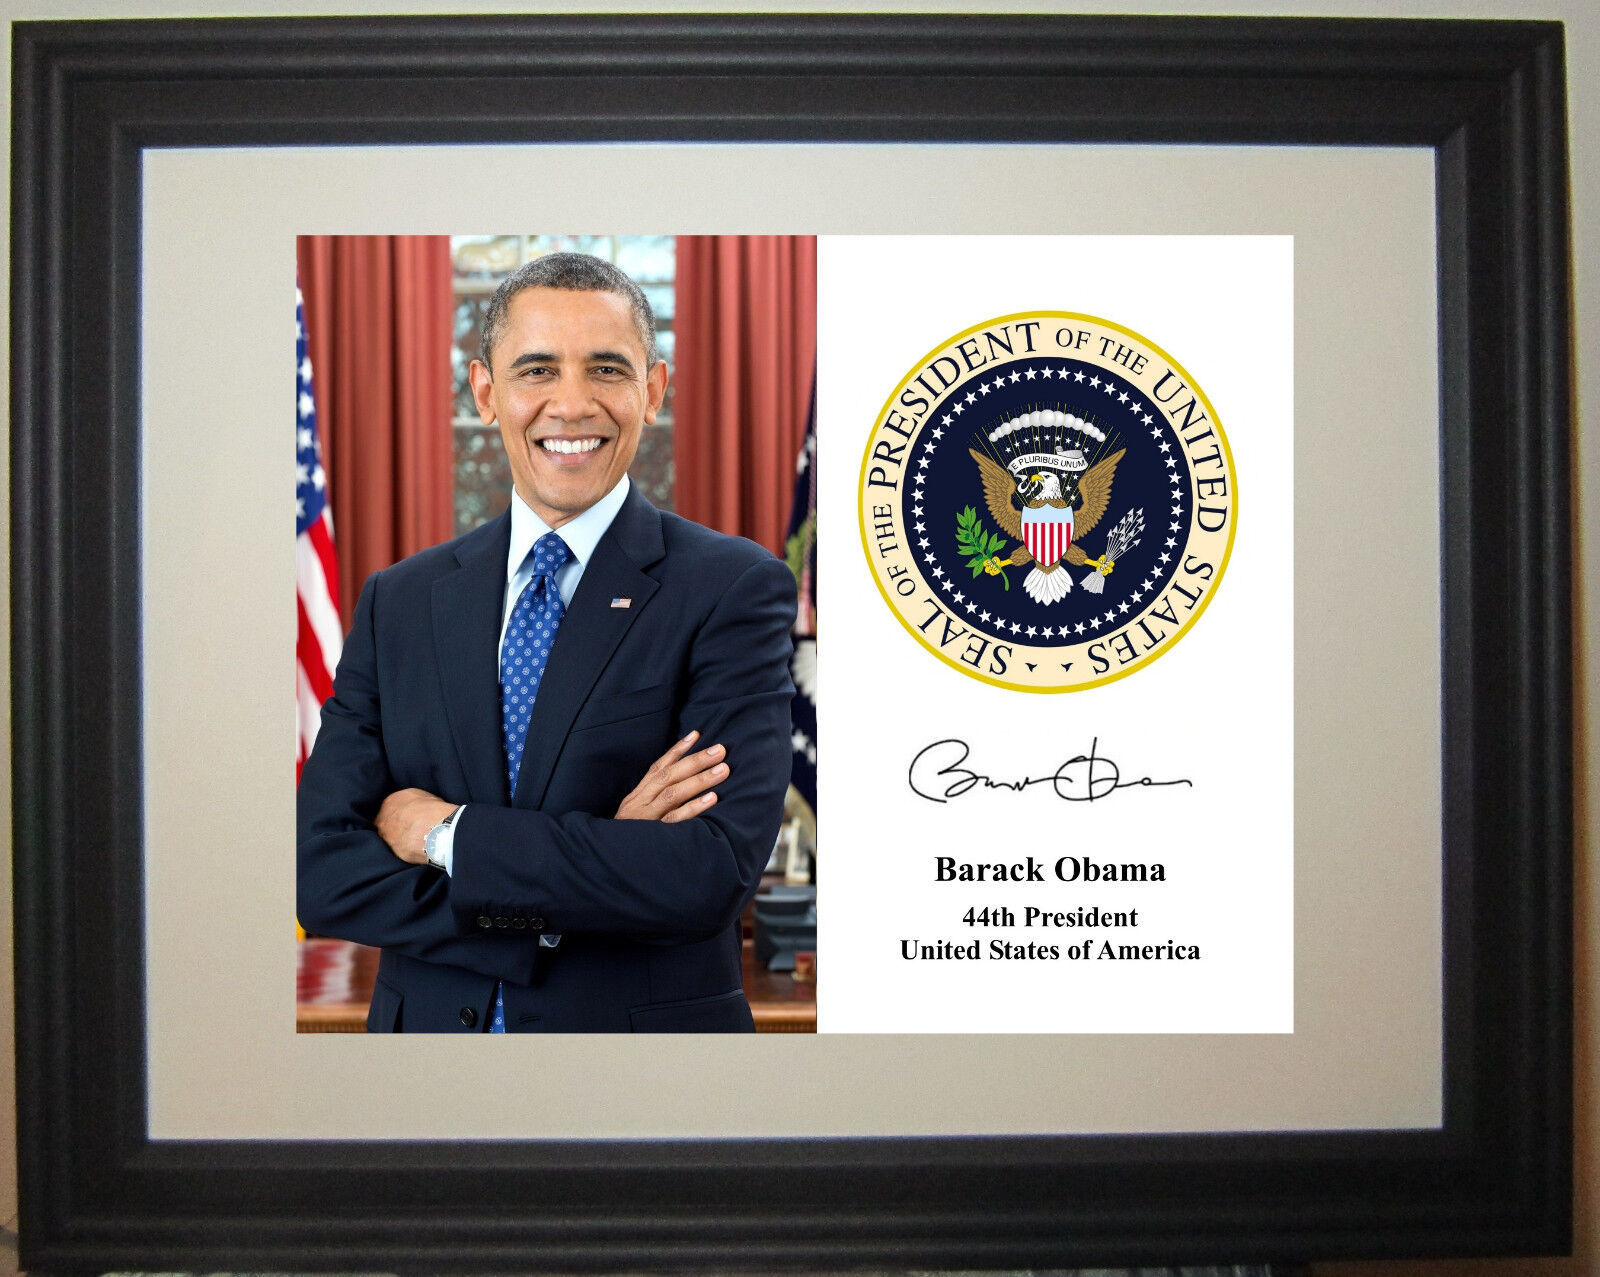 Barack Obama Presidential Seal Autograph Framed Photo Photograph Portrait